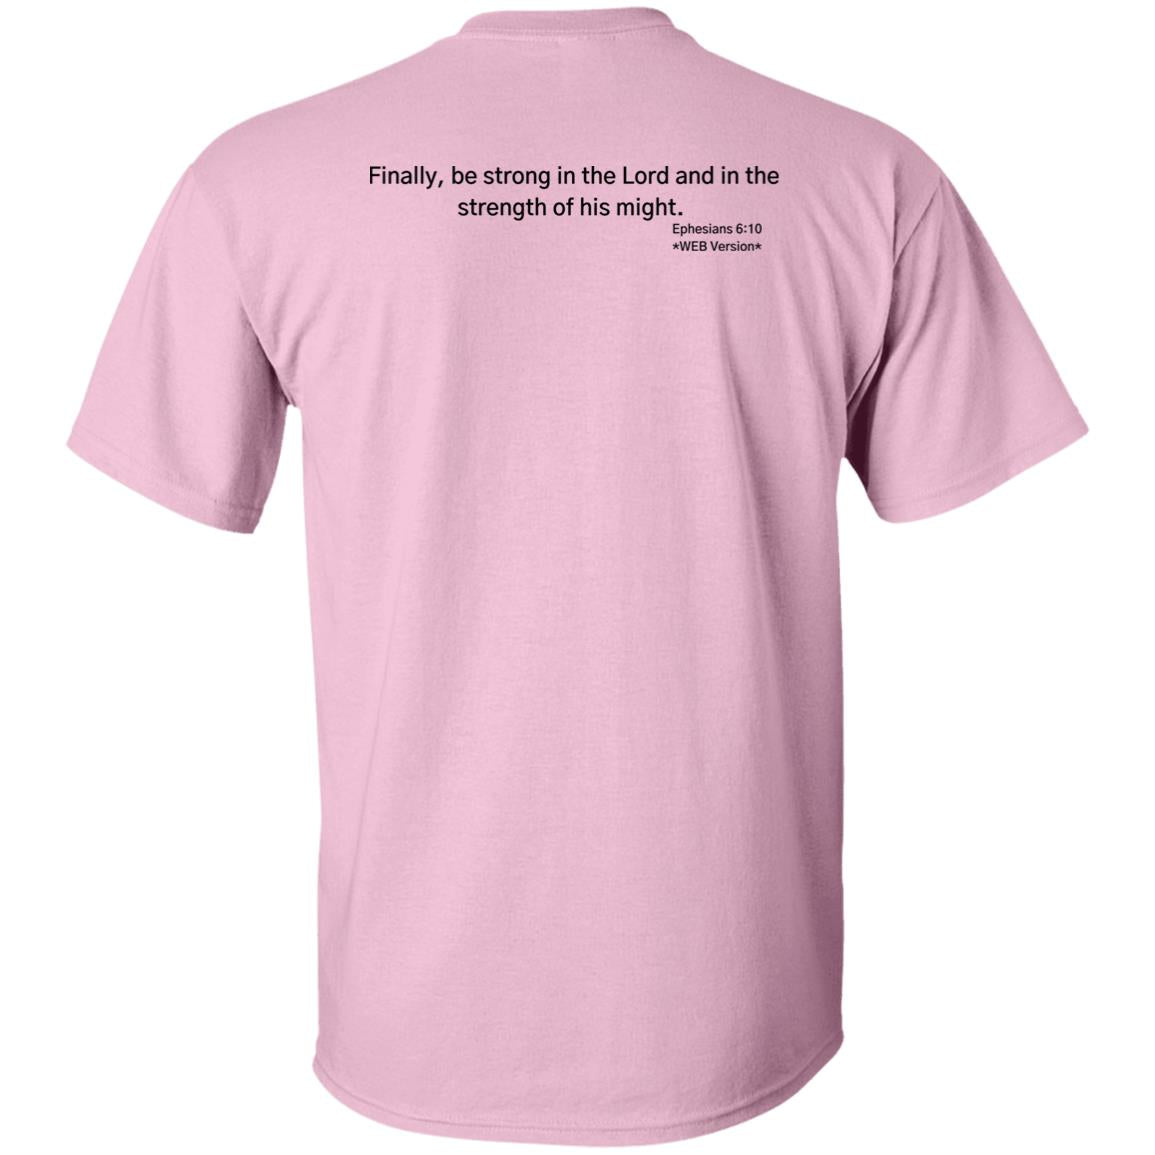 K.I. (Eph 6:10) T-Shirt